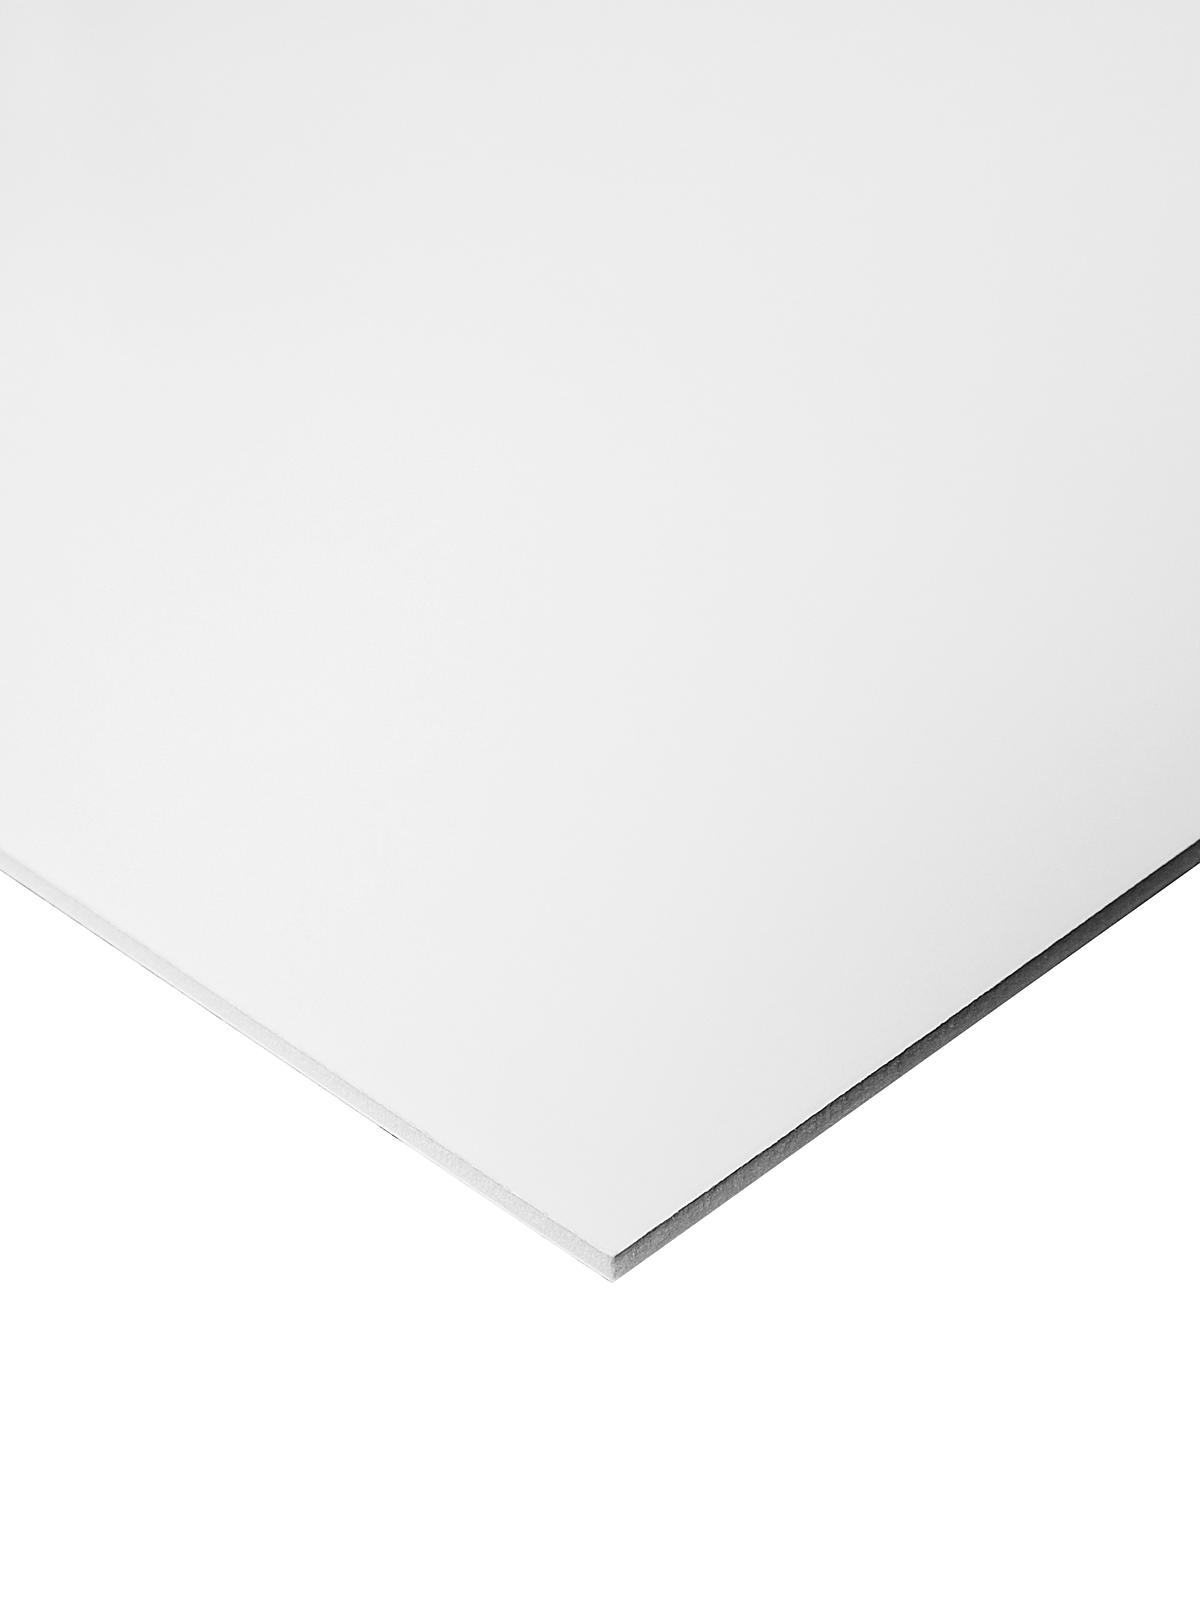 Fome-cor Board White 3 16 In. X 32 In. X 40 In. Each